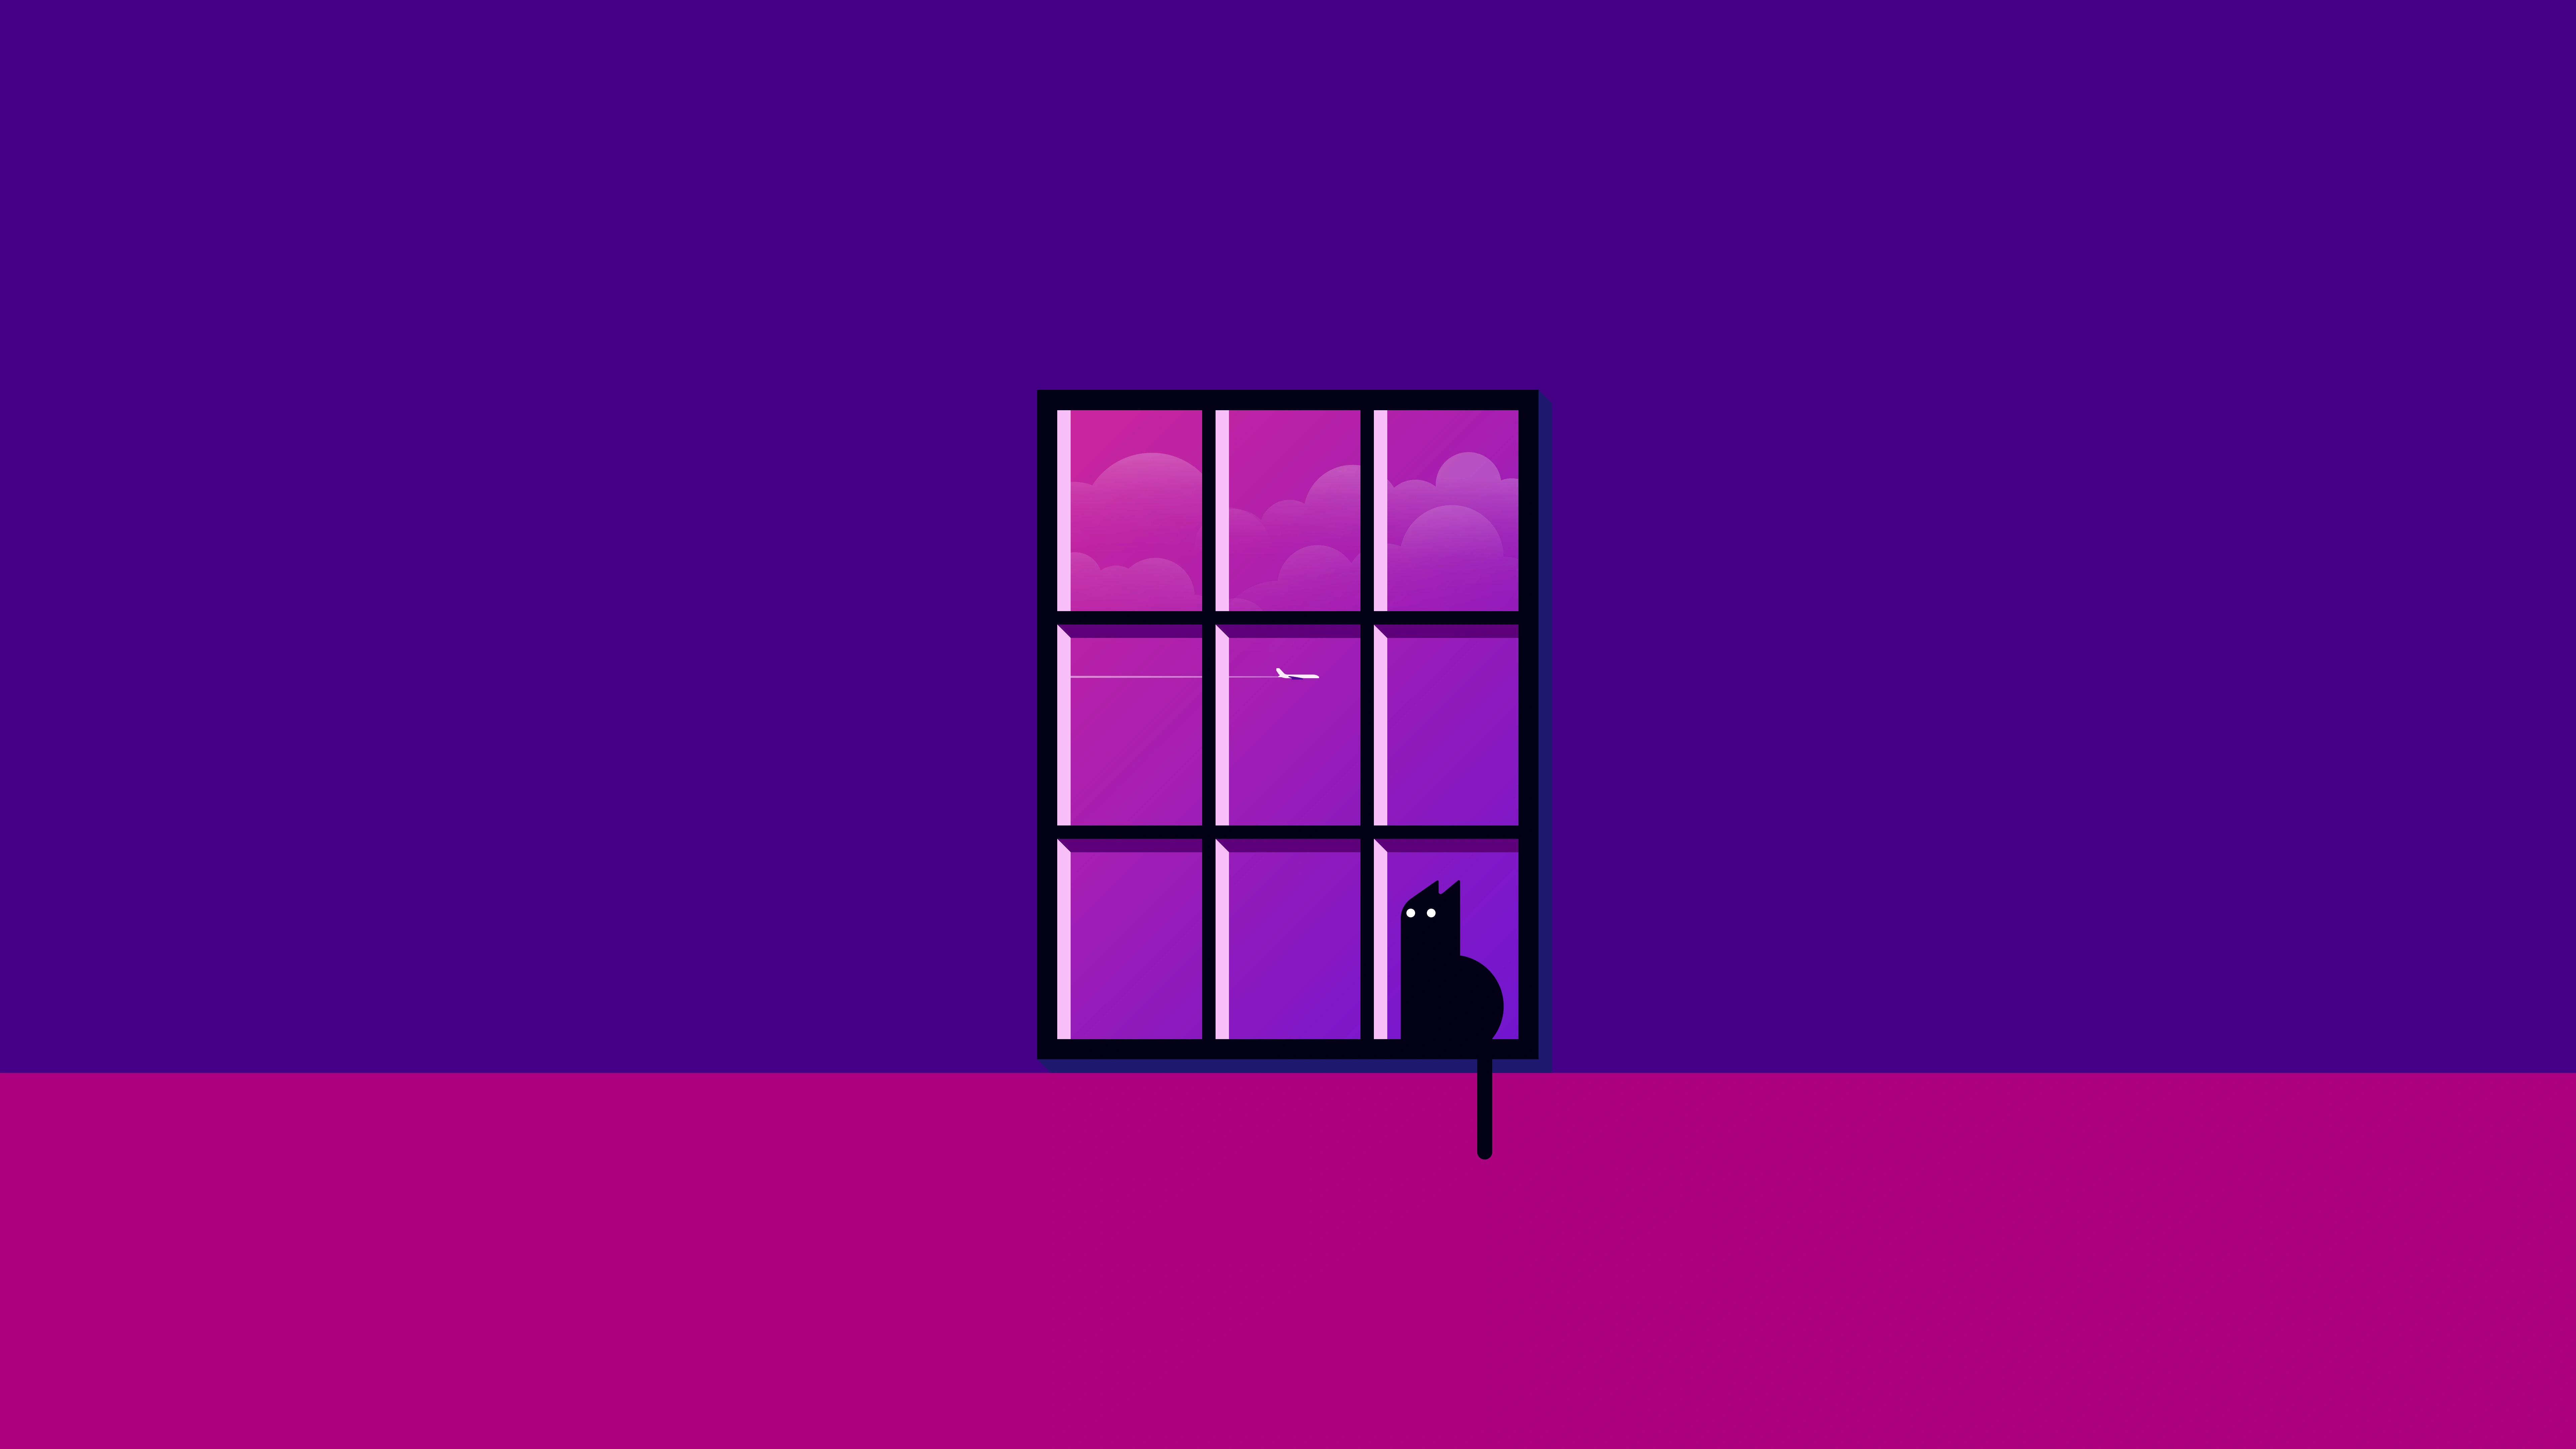 cat sitting window minimal 8k kl.jpg